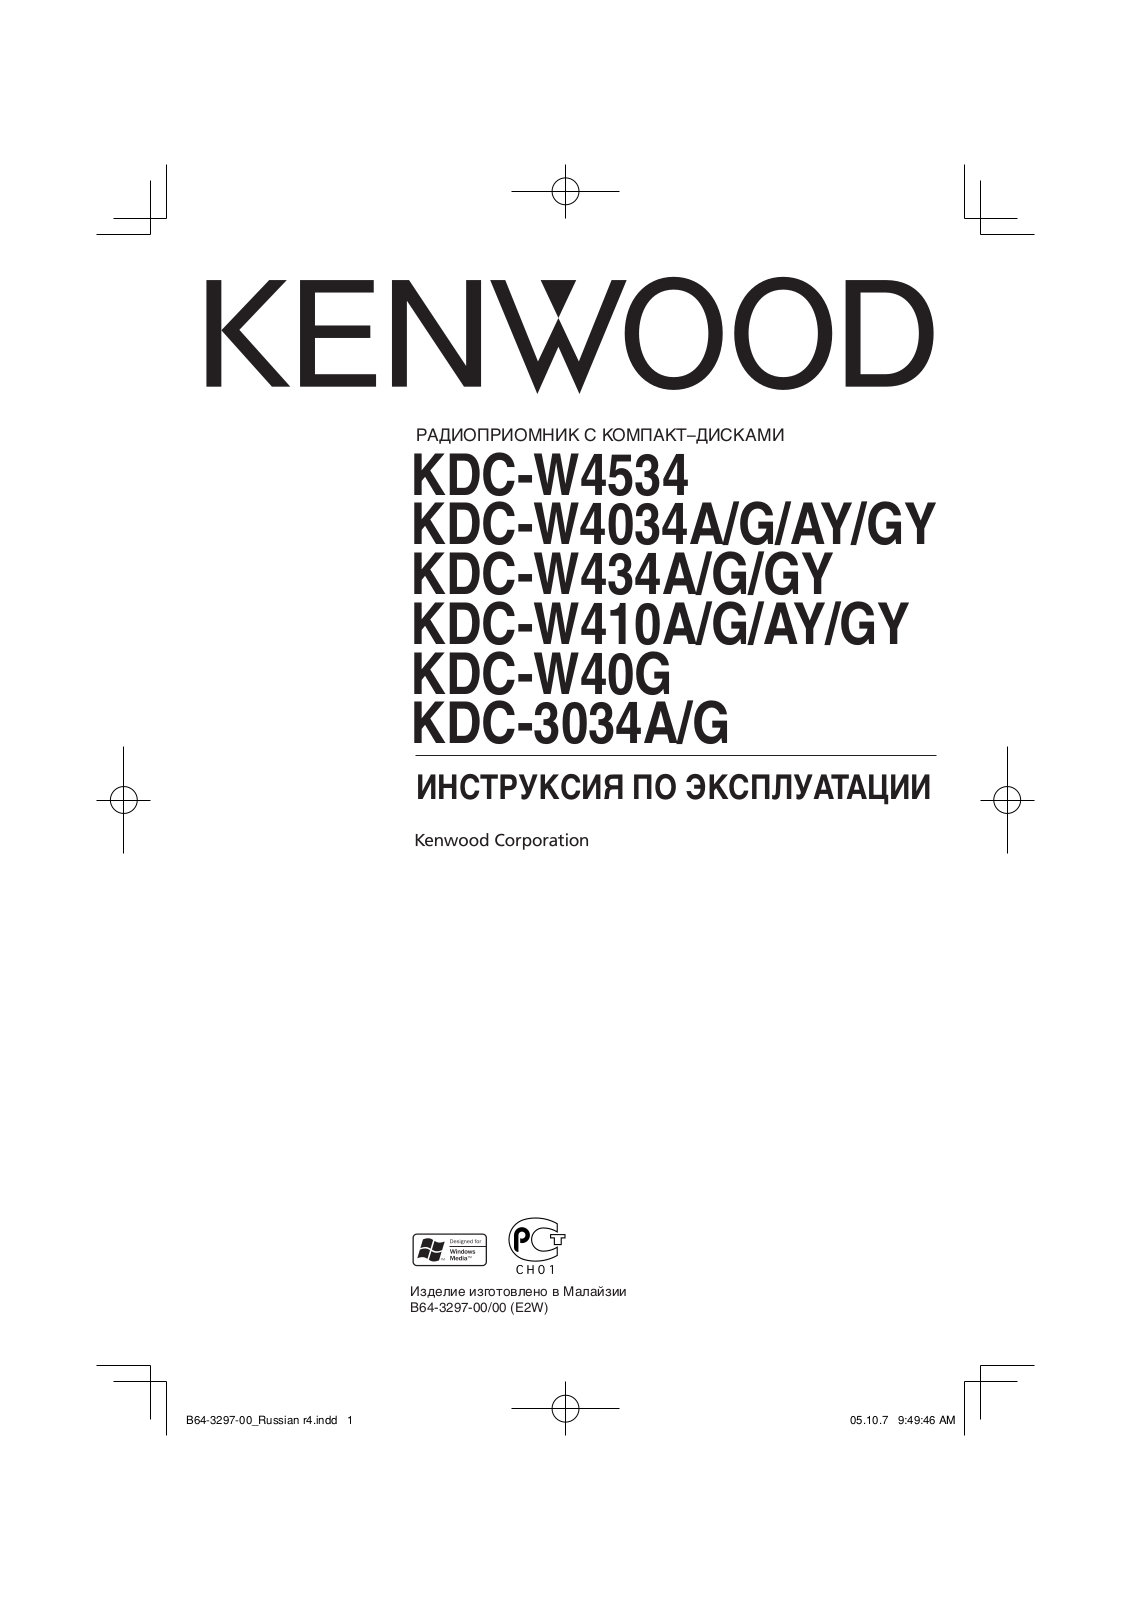 Kenwood KDC-W4034GY User Manual